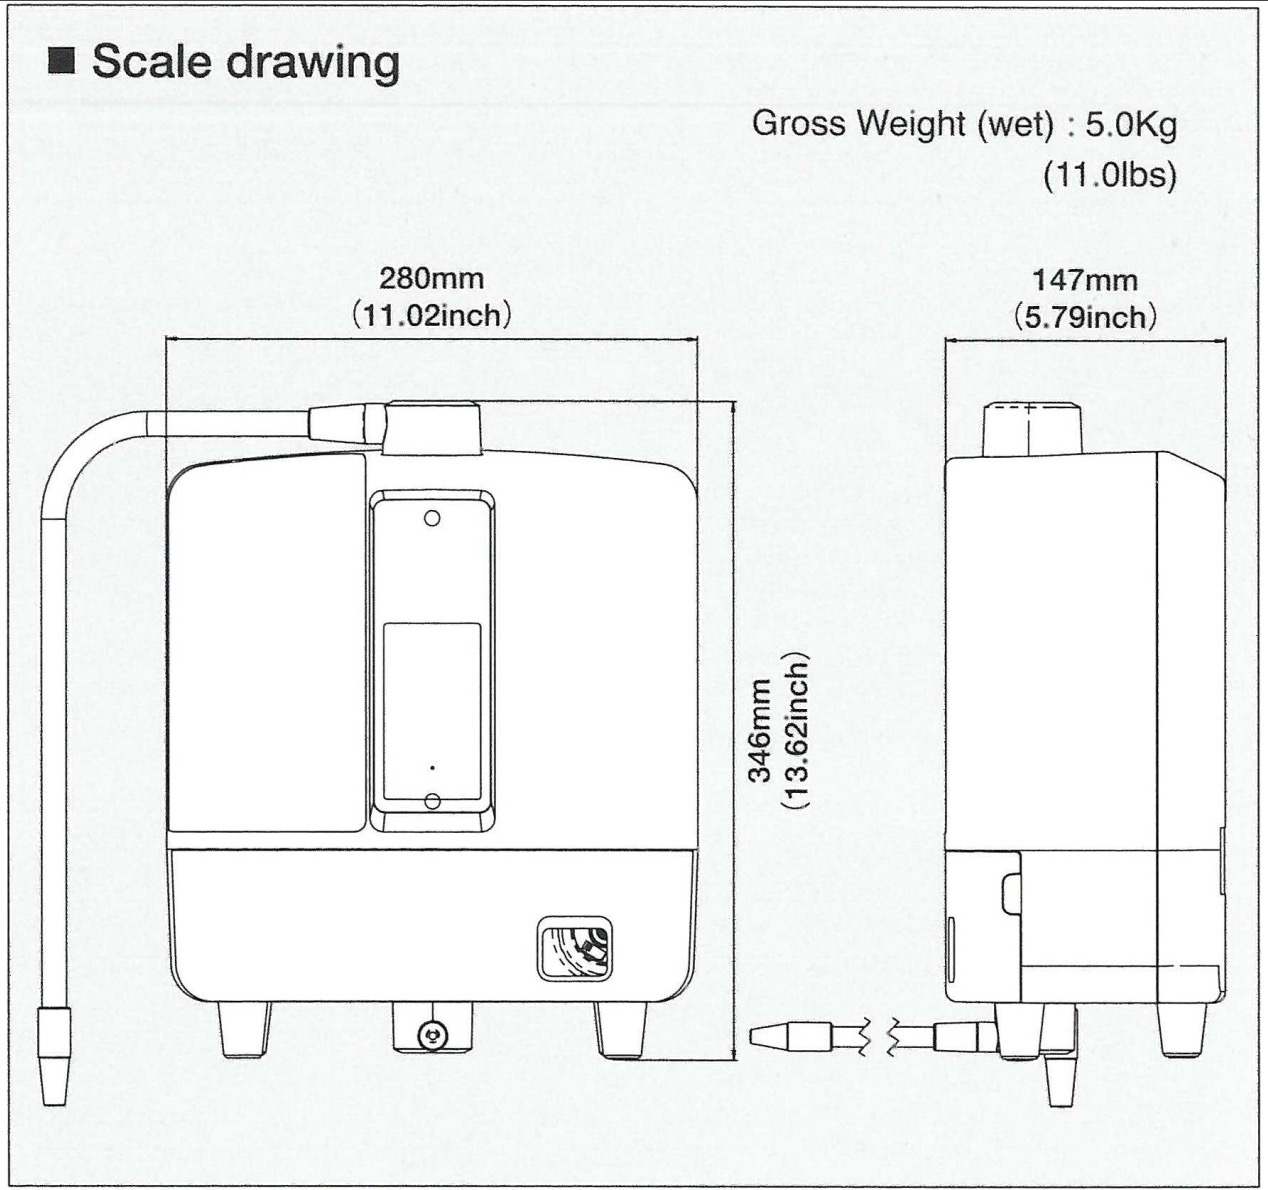 Kangen 8 Scale Drawing